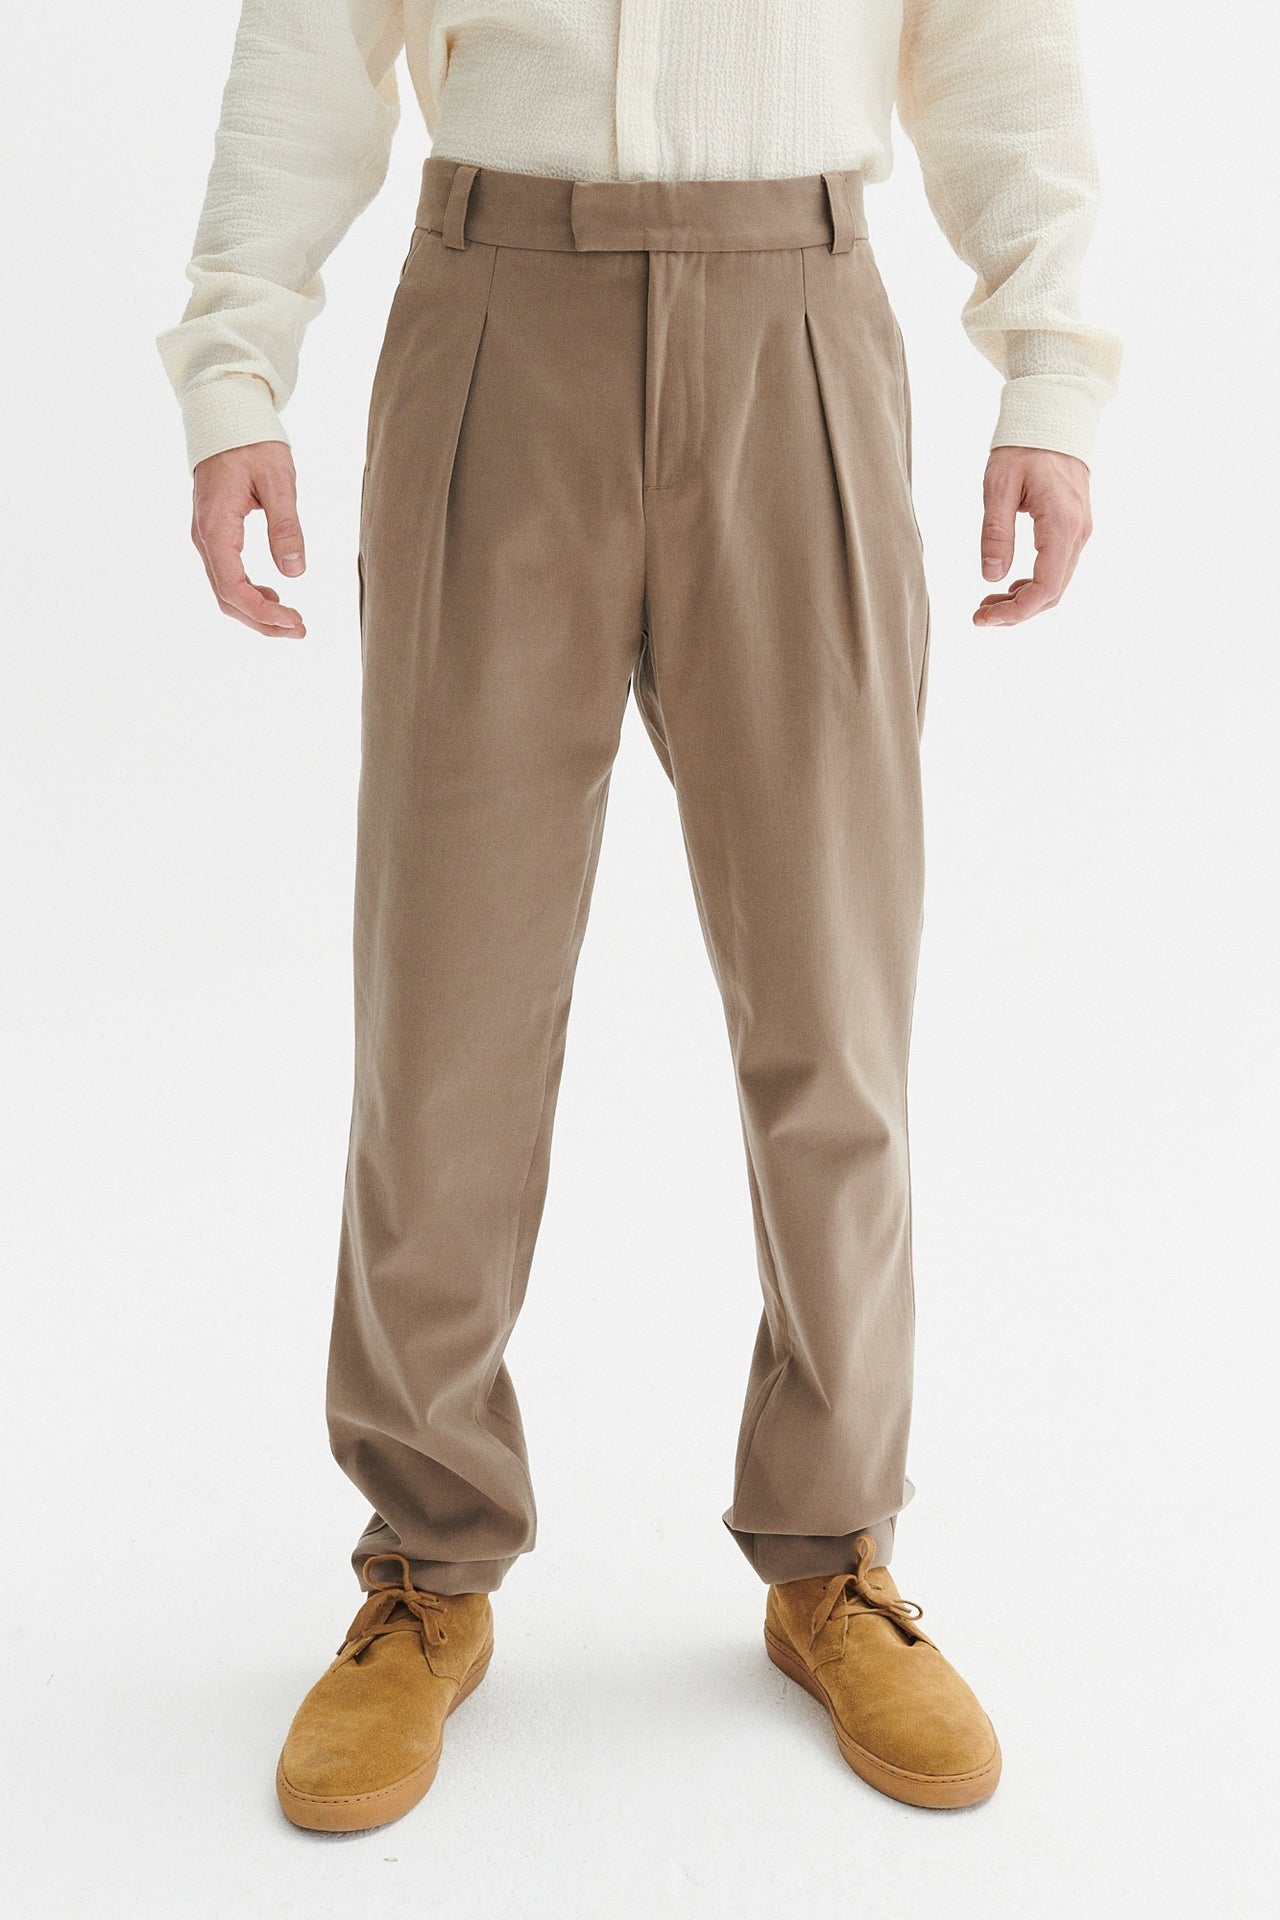 Bohemian Trousers in a Fine Beige Italian Organic Cotton by Albini